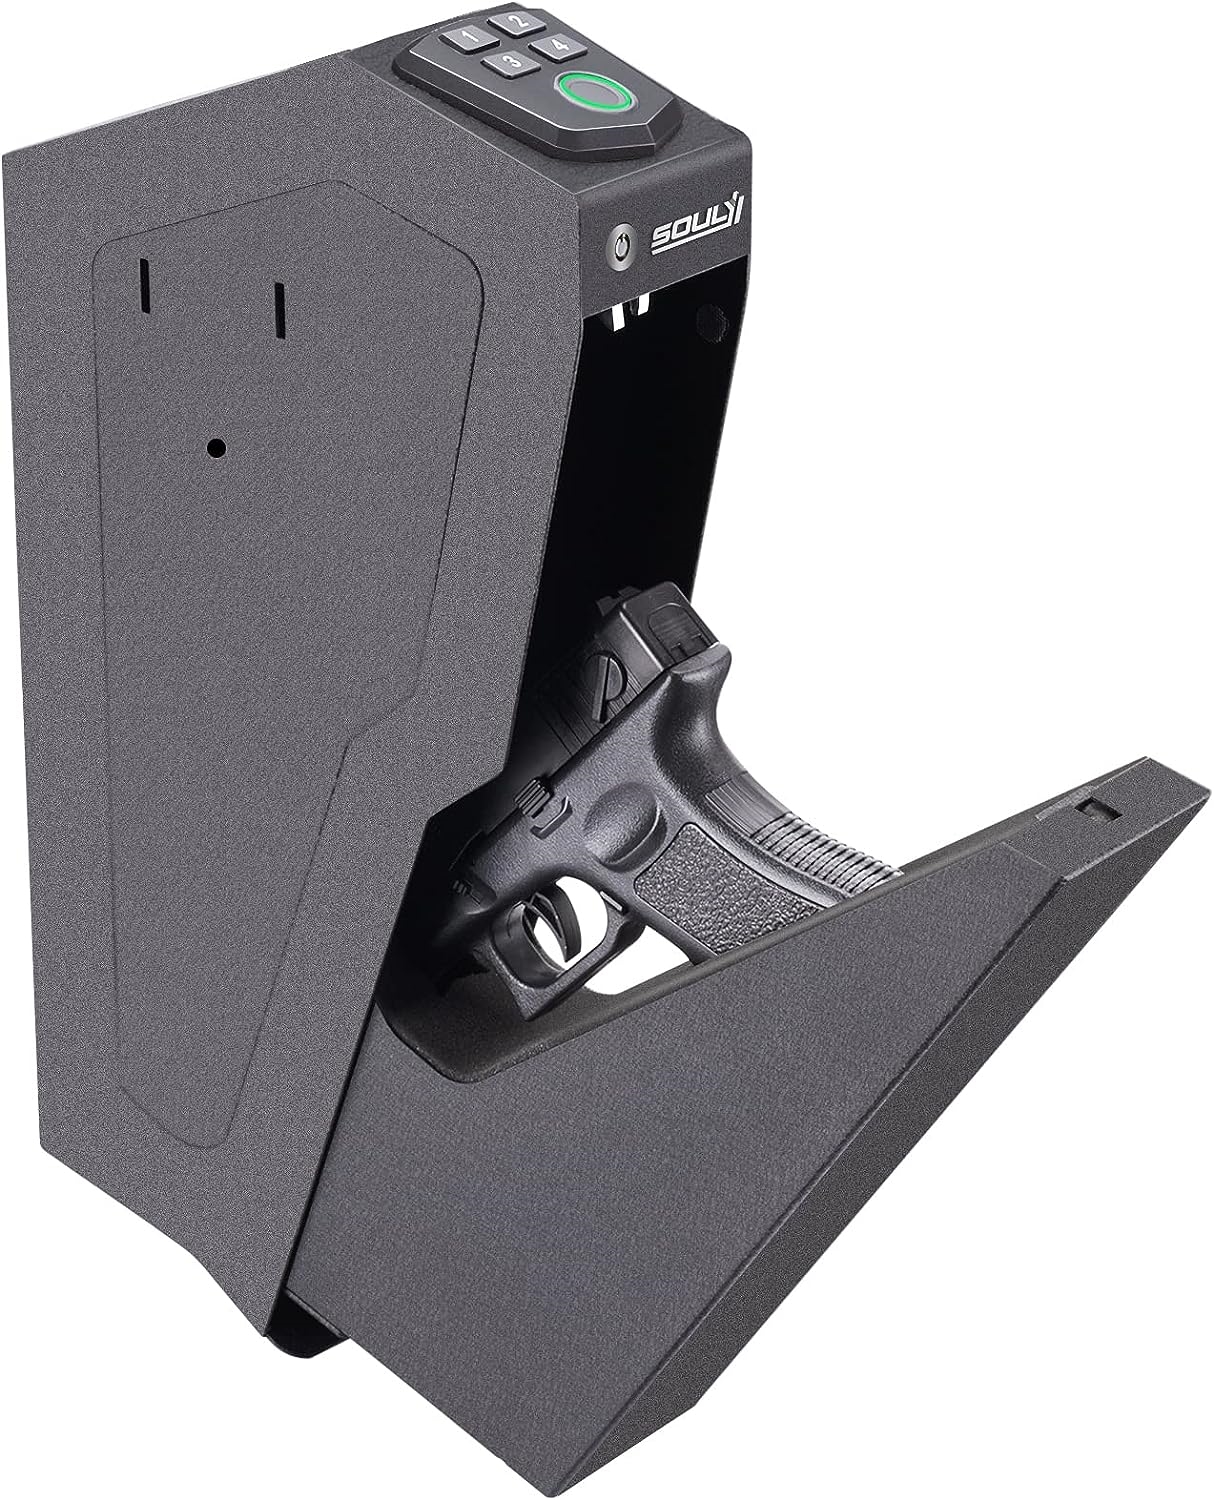 SOULYI Mounted Biometric Gun Safe